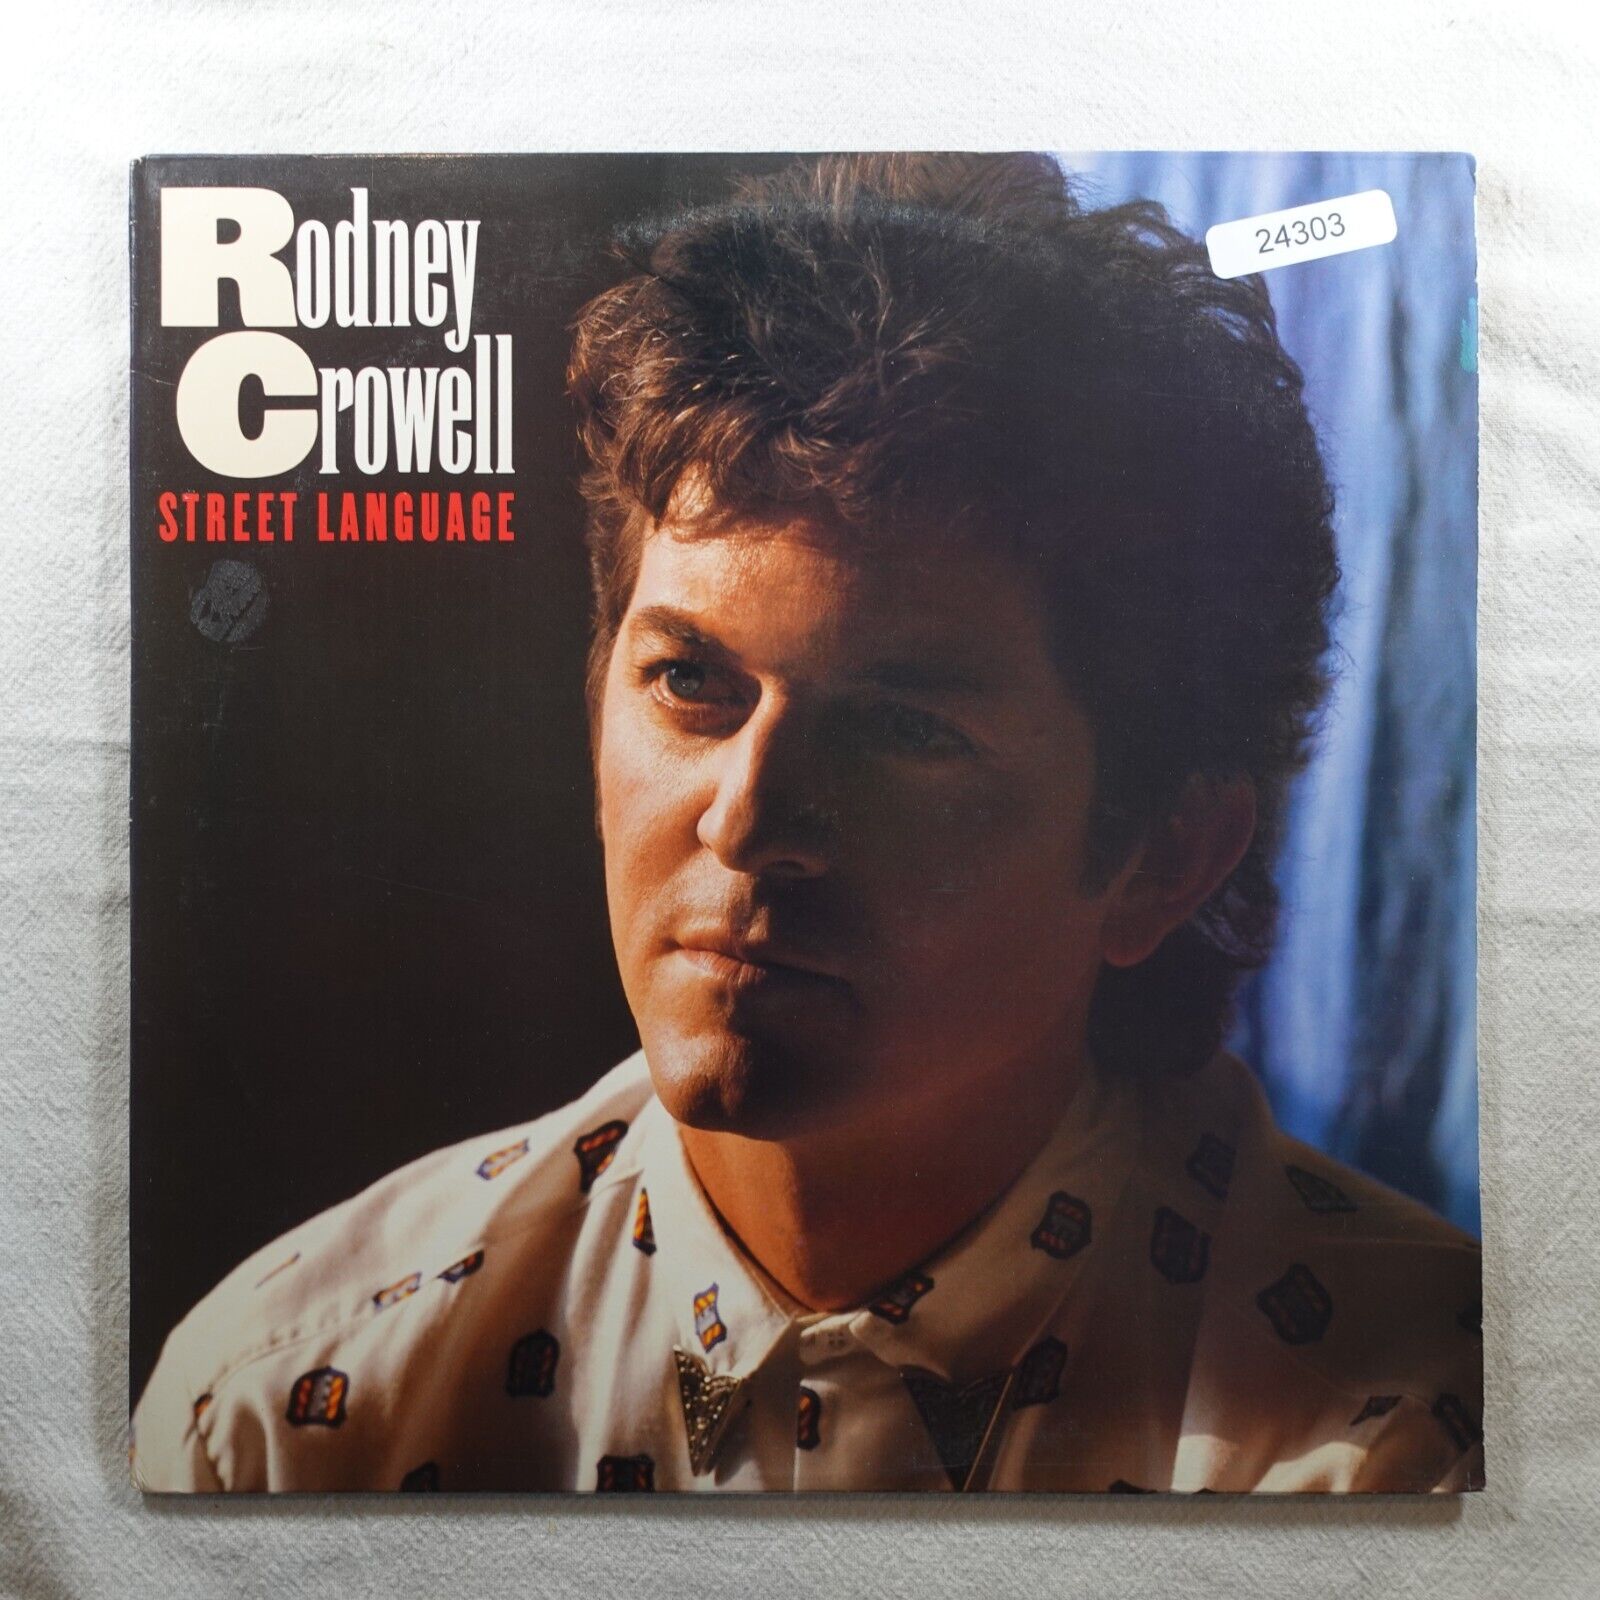 Rodney Crowell Street Language   Record Album Vinyl LP